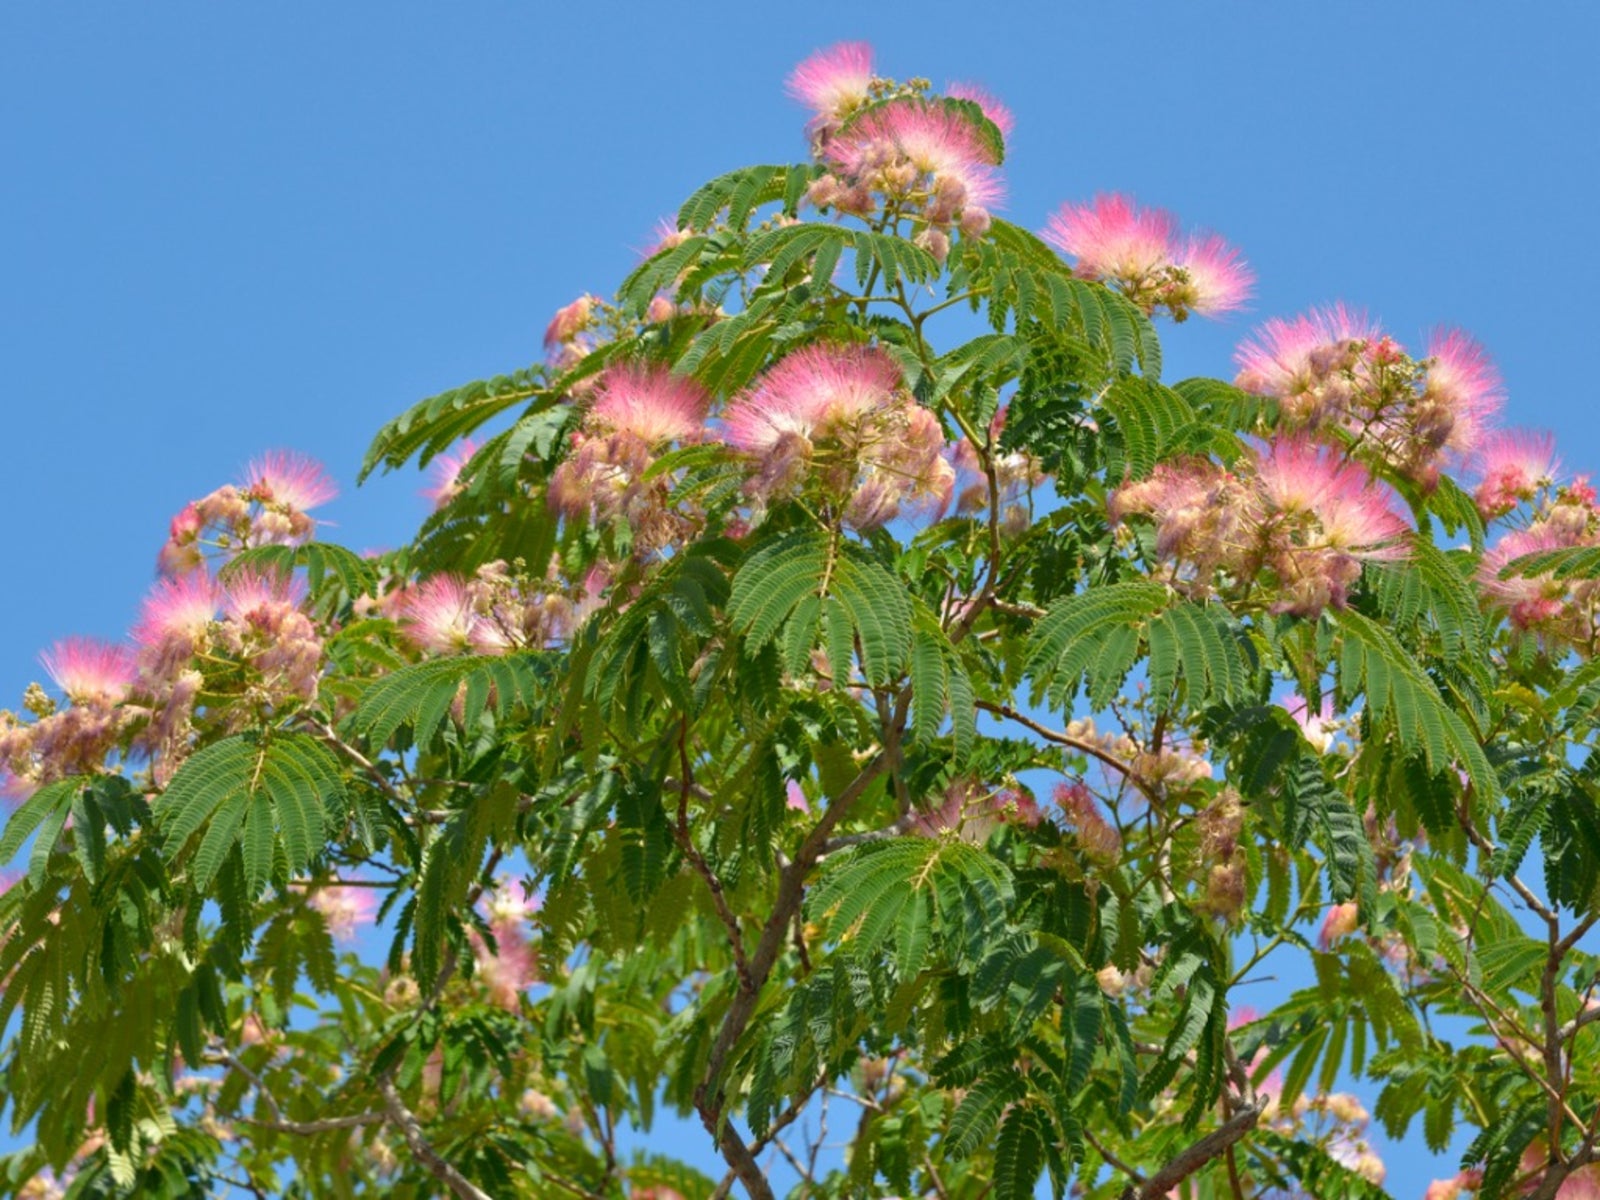 mimosa tree transplanting - tips on transplanting a mimosa tree in